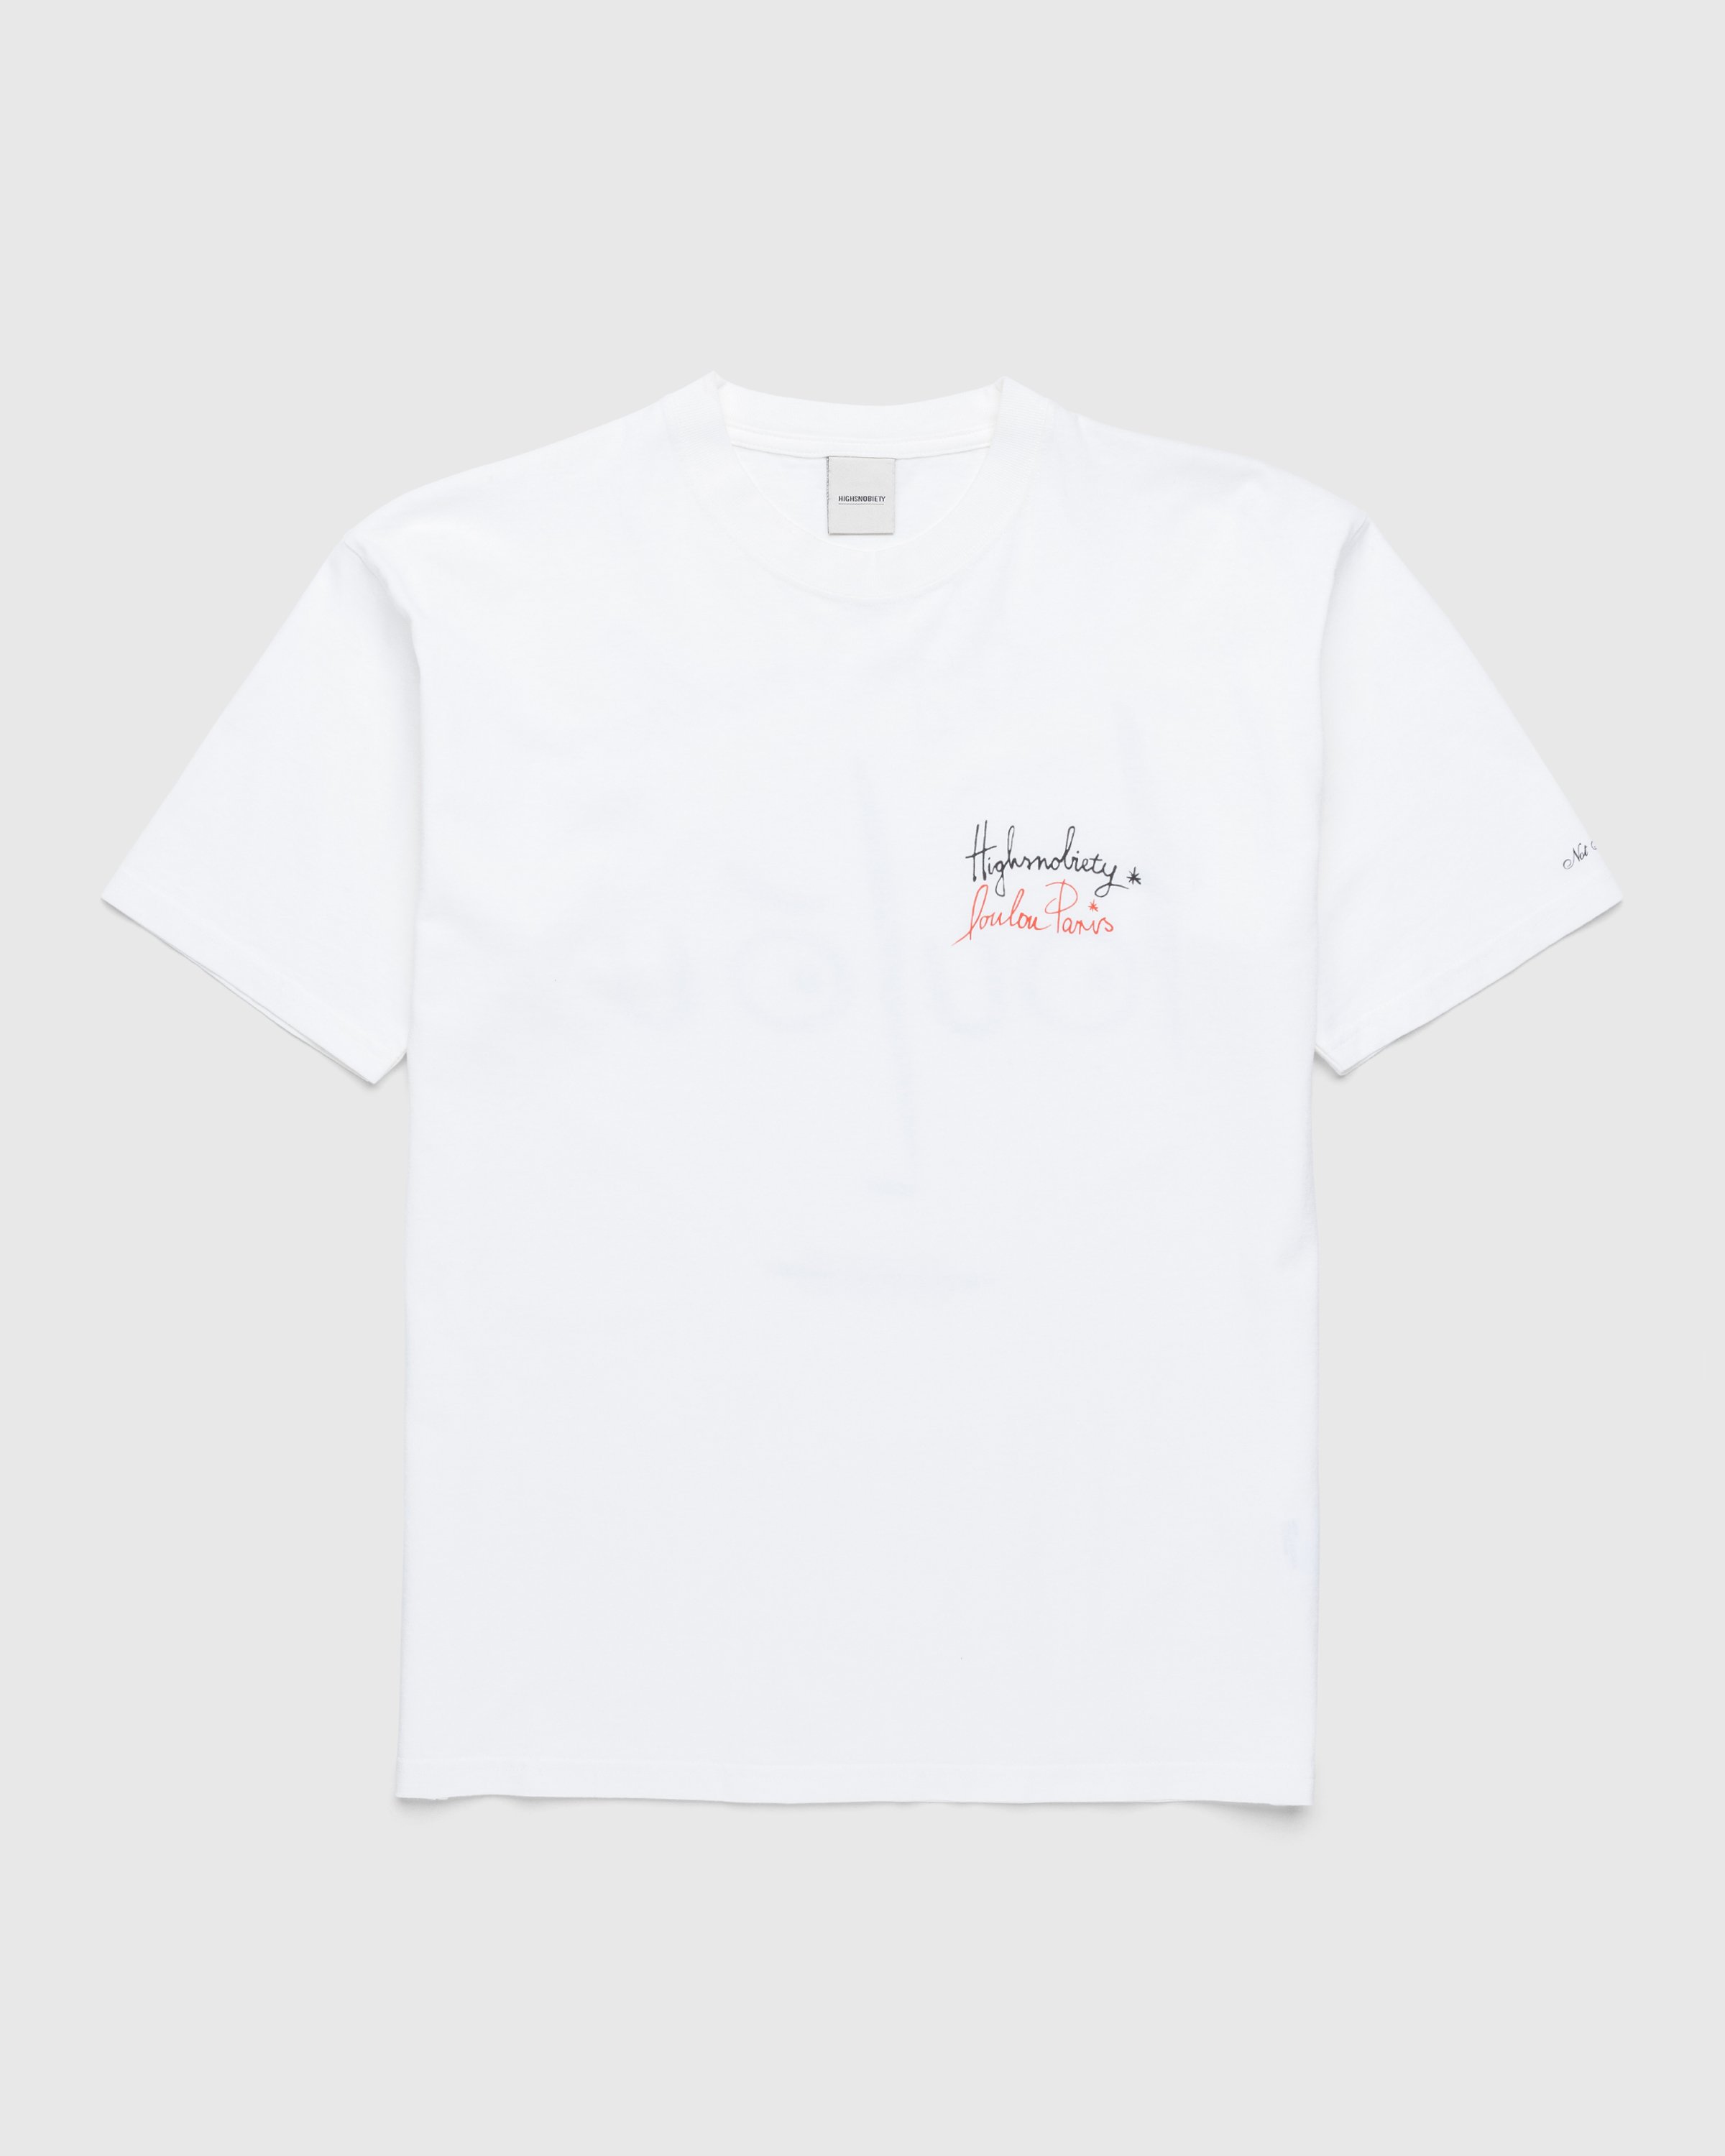 Loulou Paris x Highsnobiety - T-Shirt White - Clothing - White - Image 2